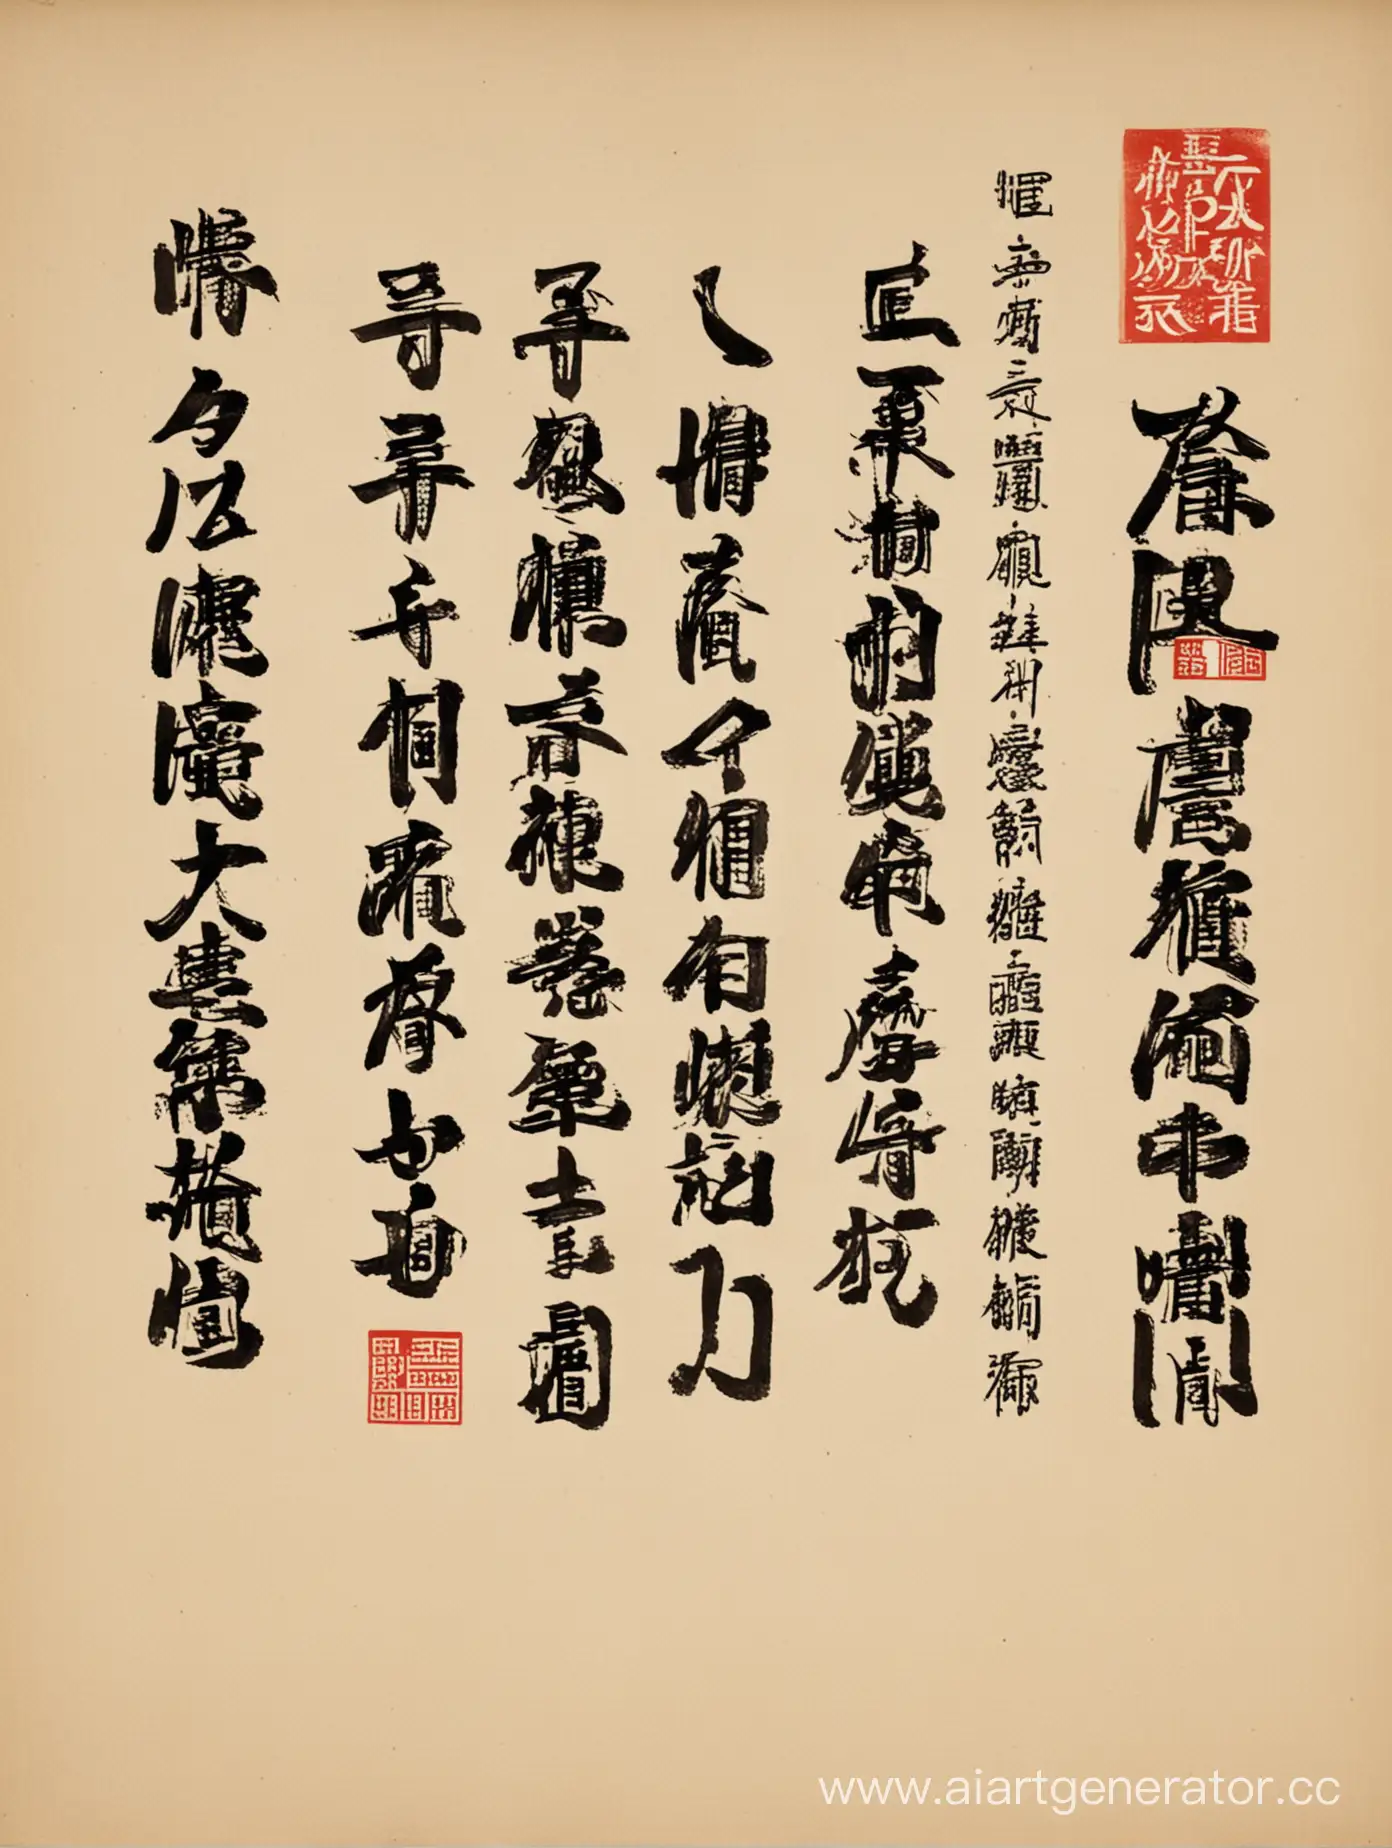 Historic-Kanagawa-Text-Inscription-Chinas-Elections-and-Aesthetics